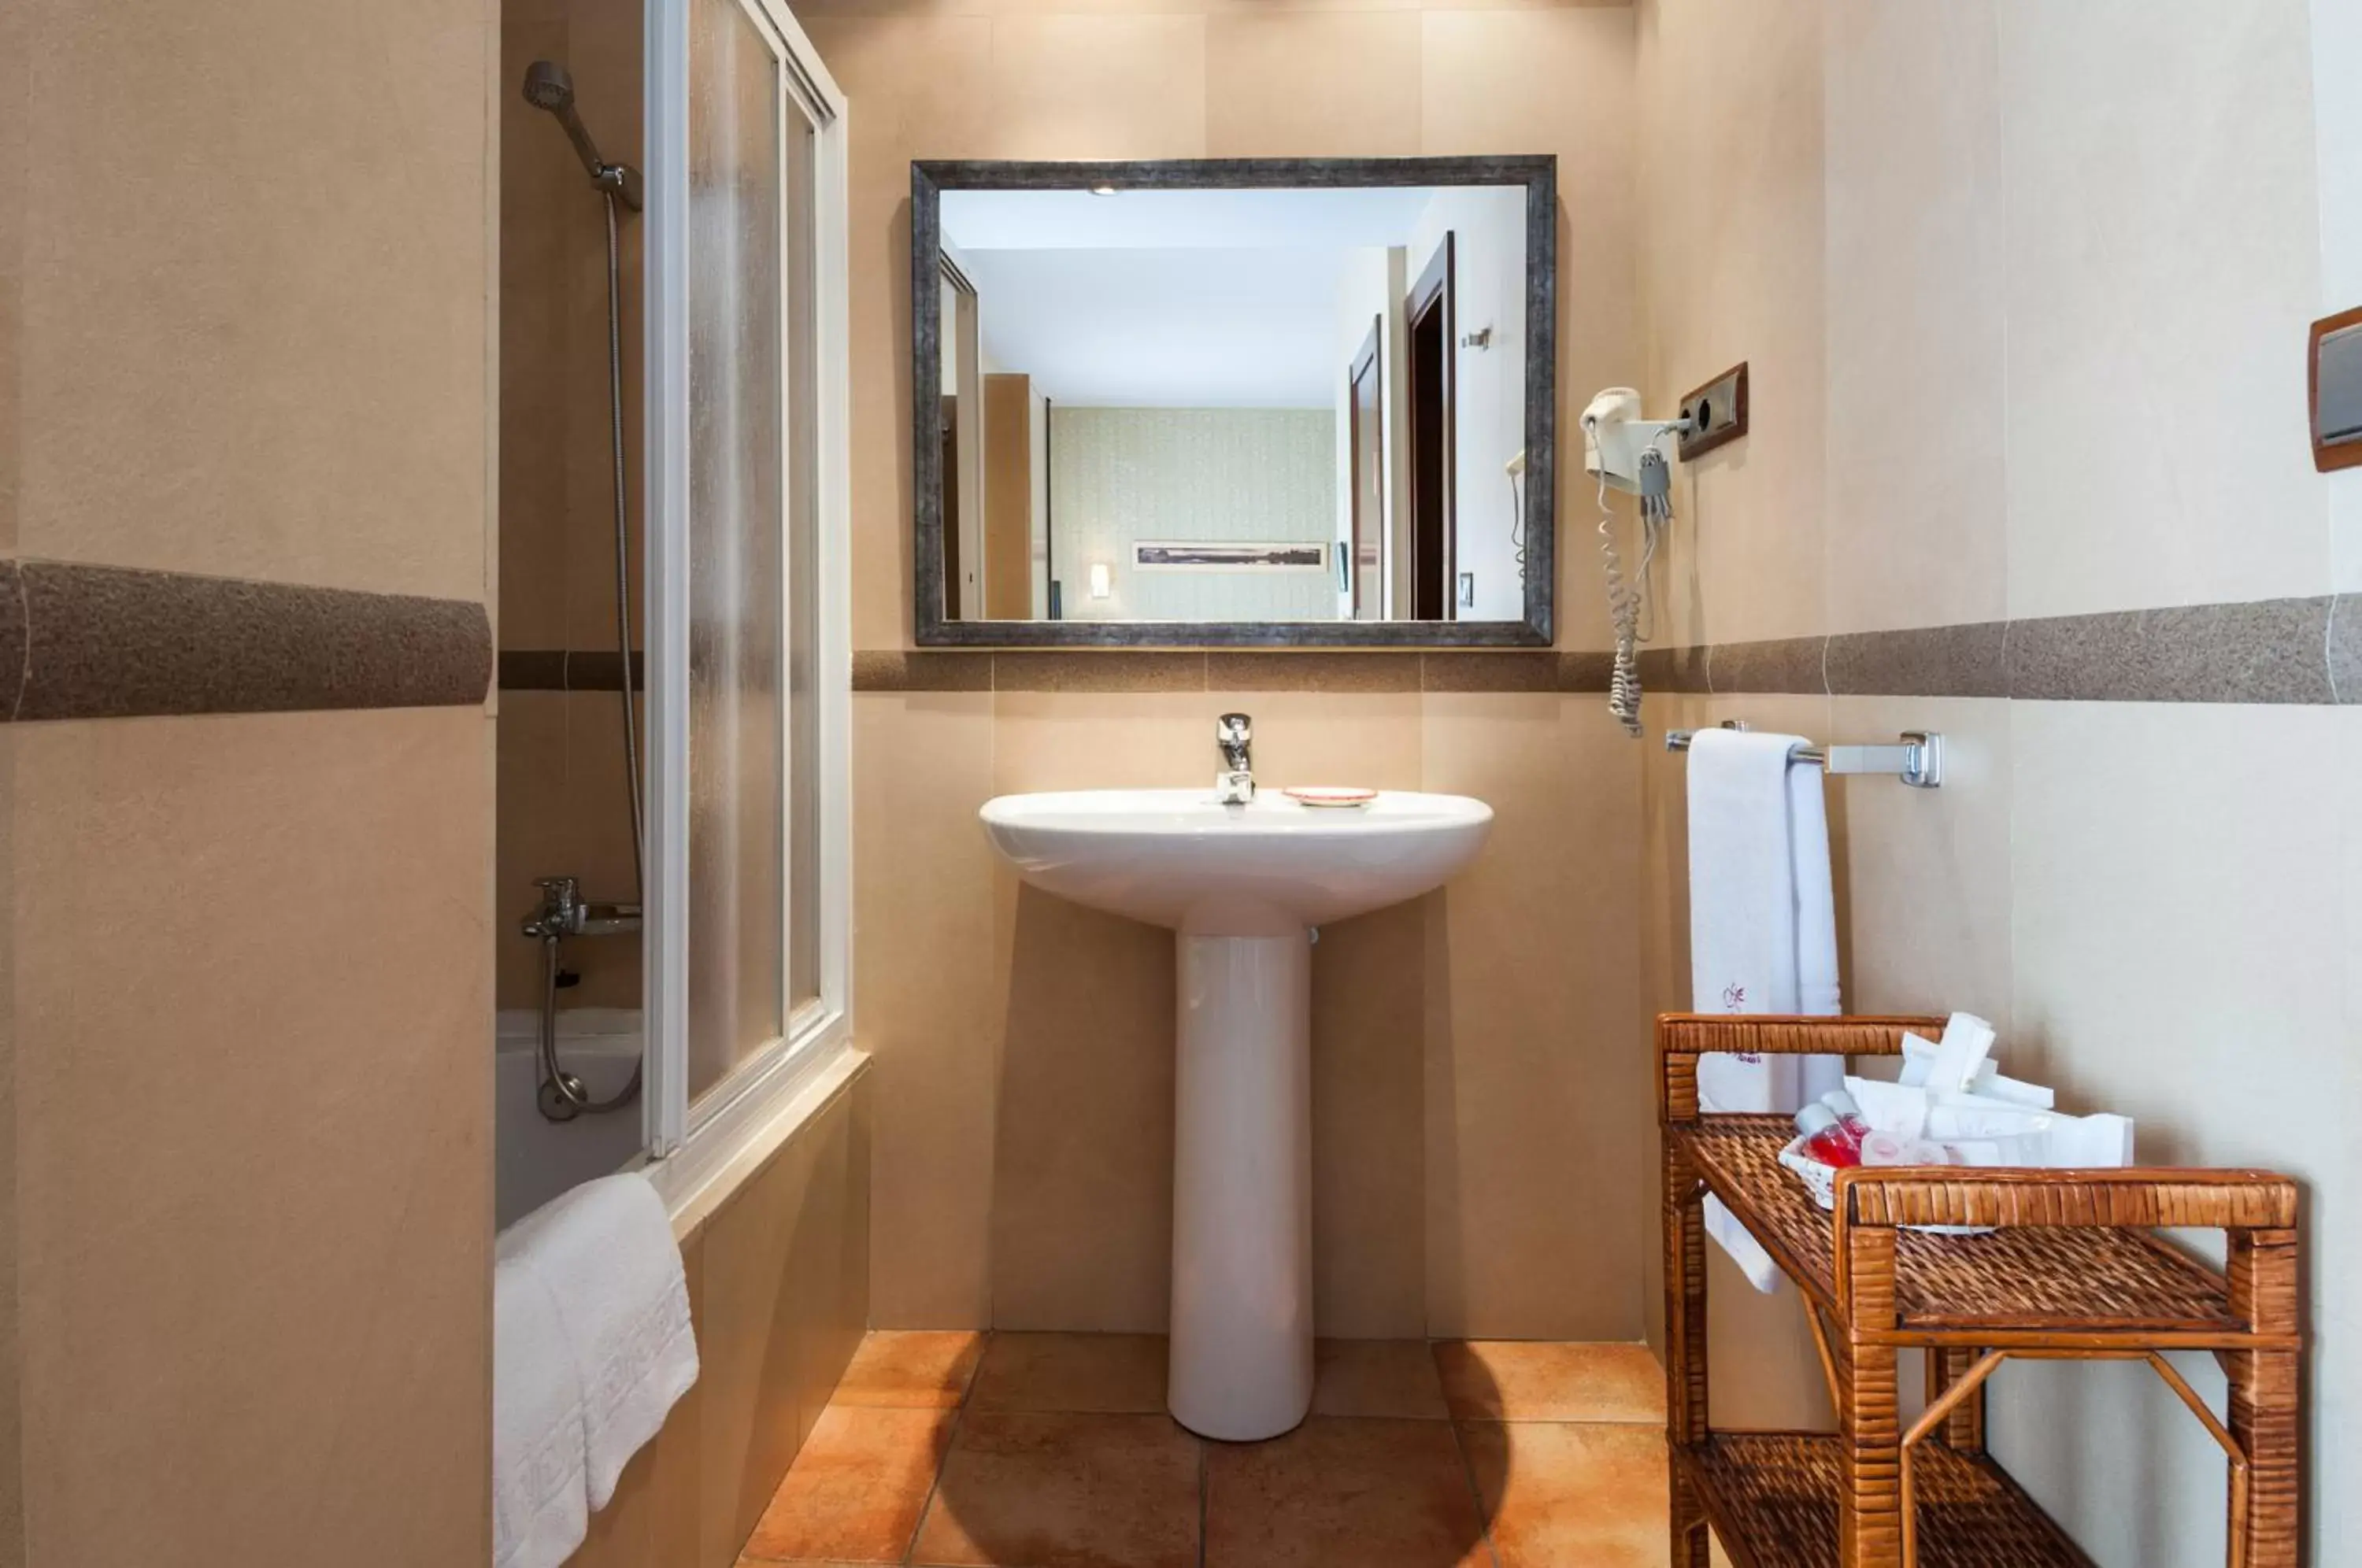 Photo of the whole room, Bathroom in Hotel Doña Manuela